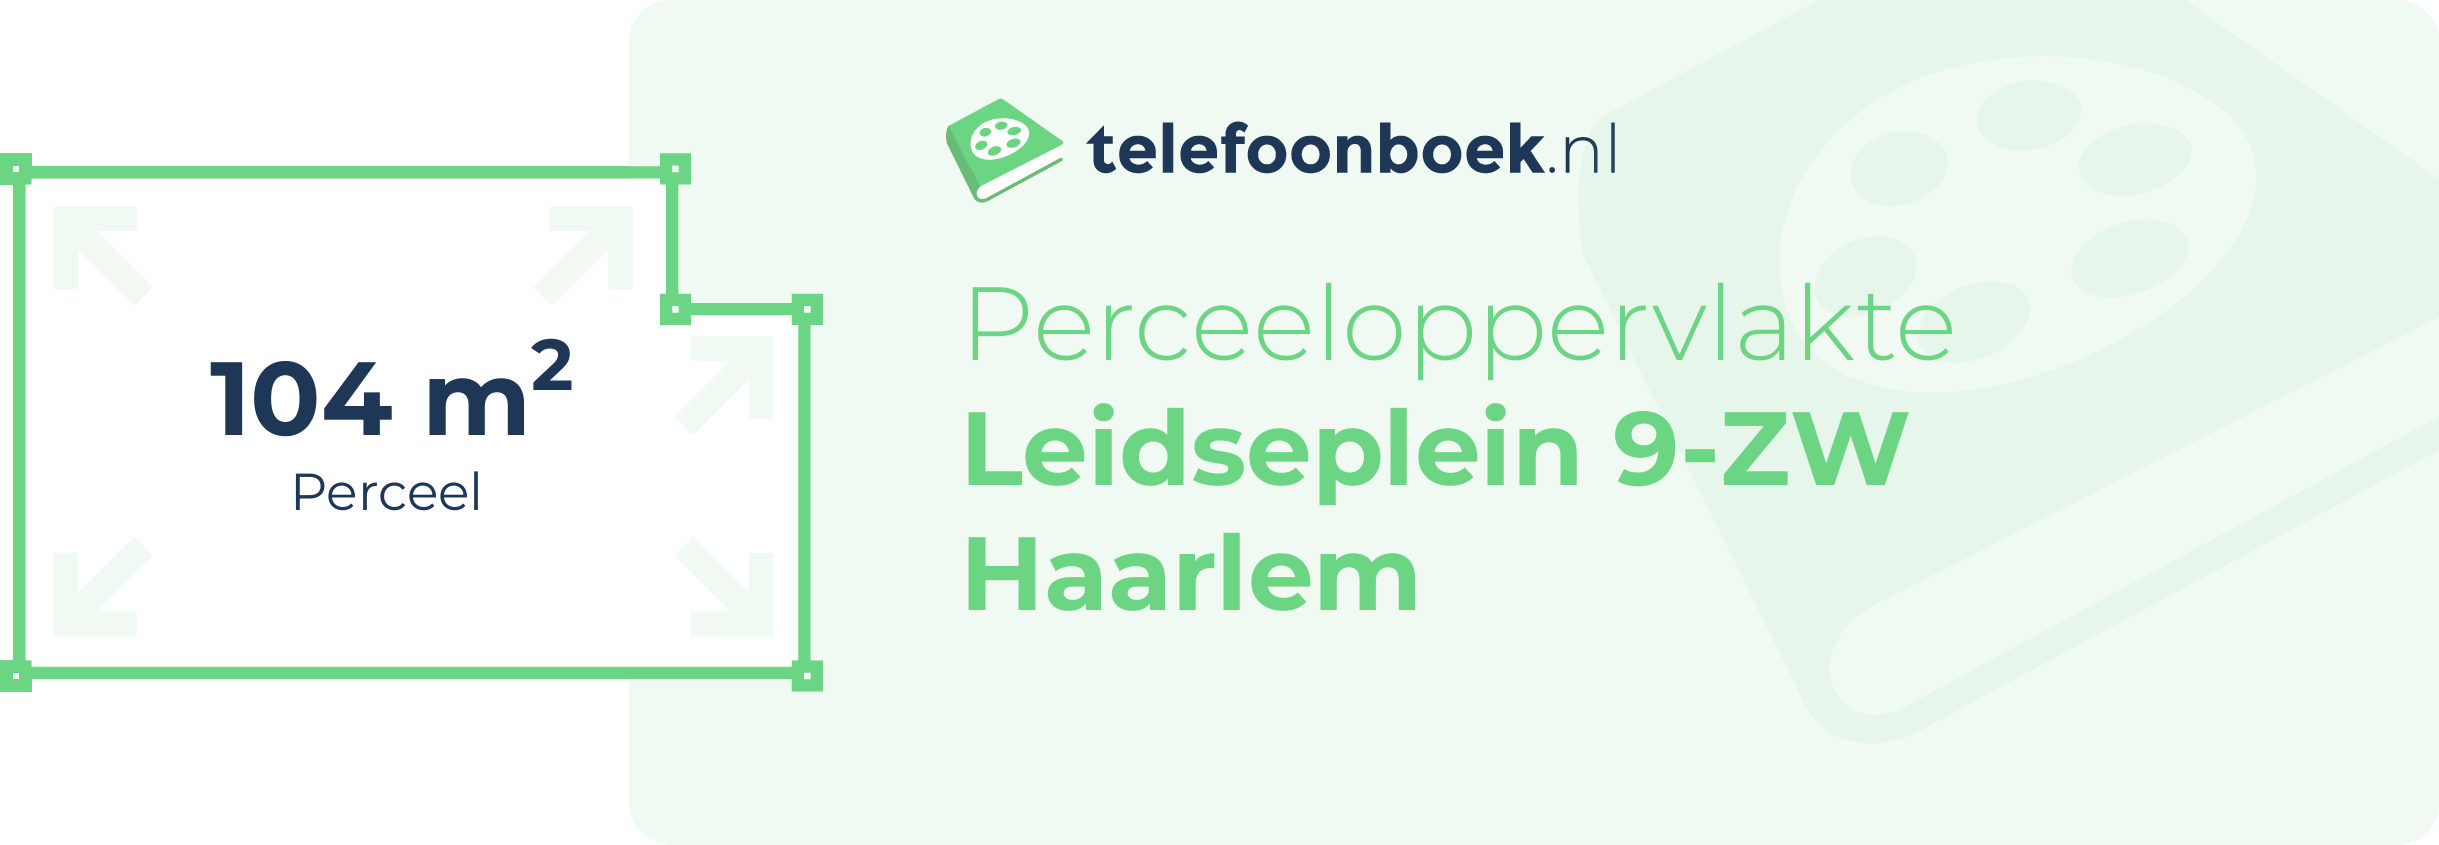 Perceeloppervlakte Leidseplein 9-ZW Haarlem